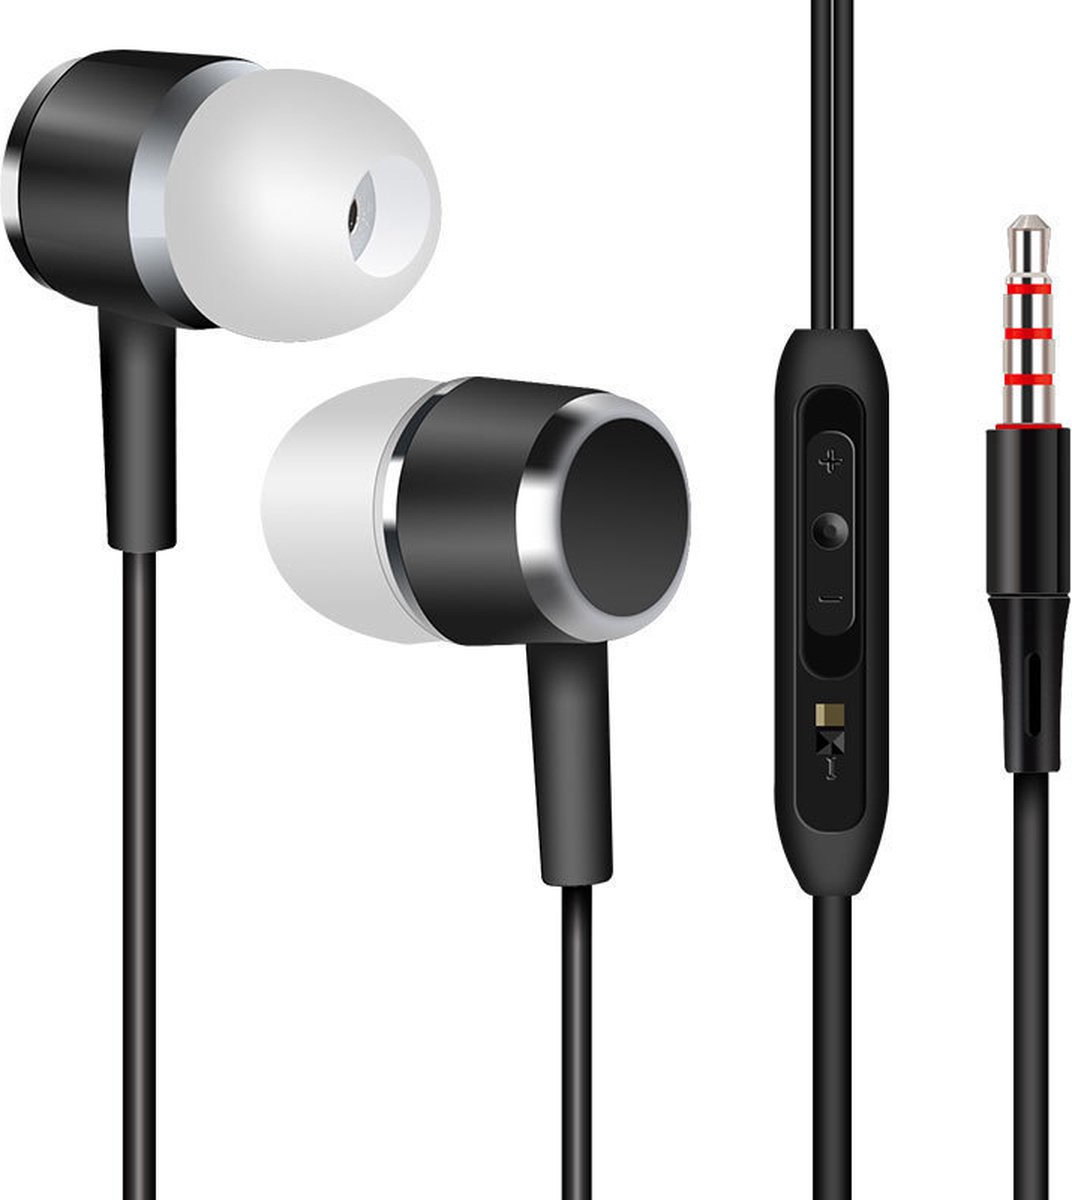 Bedrade oortjes - In Ear Oordopjes - Oortjes met Draad en Microfoon - Extra Bass - 3,5mm Jack Aansluiting - 120cm kabel - Zwart